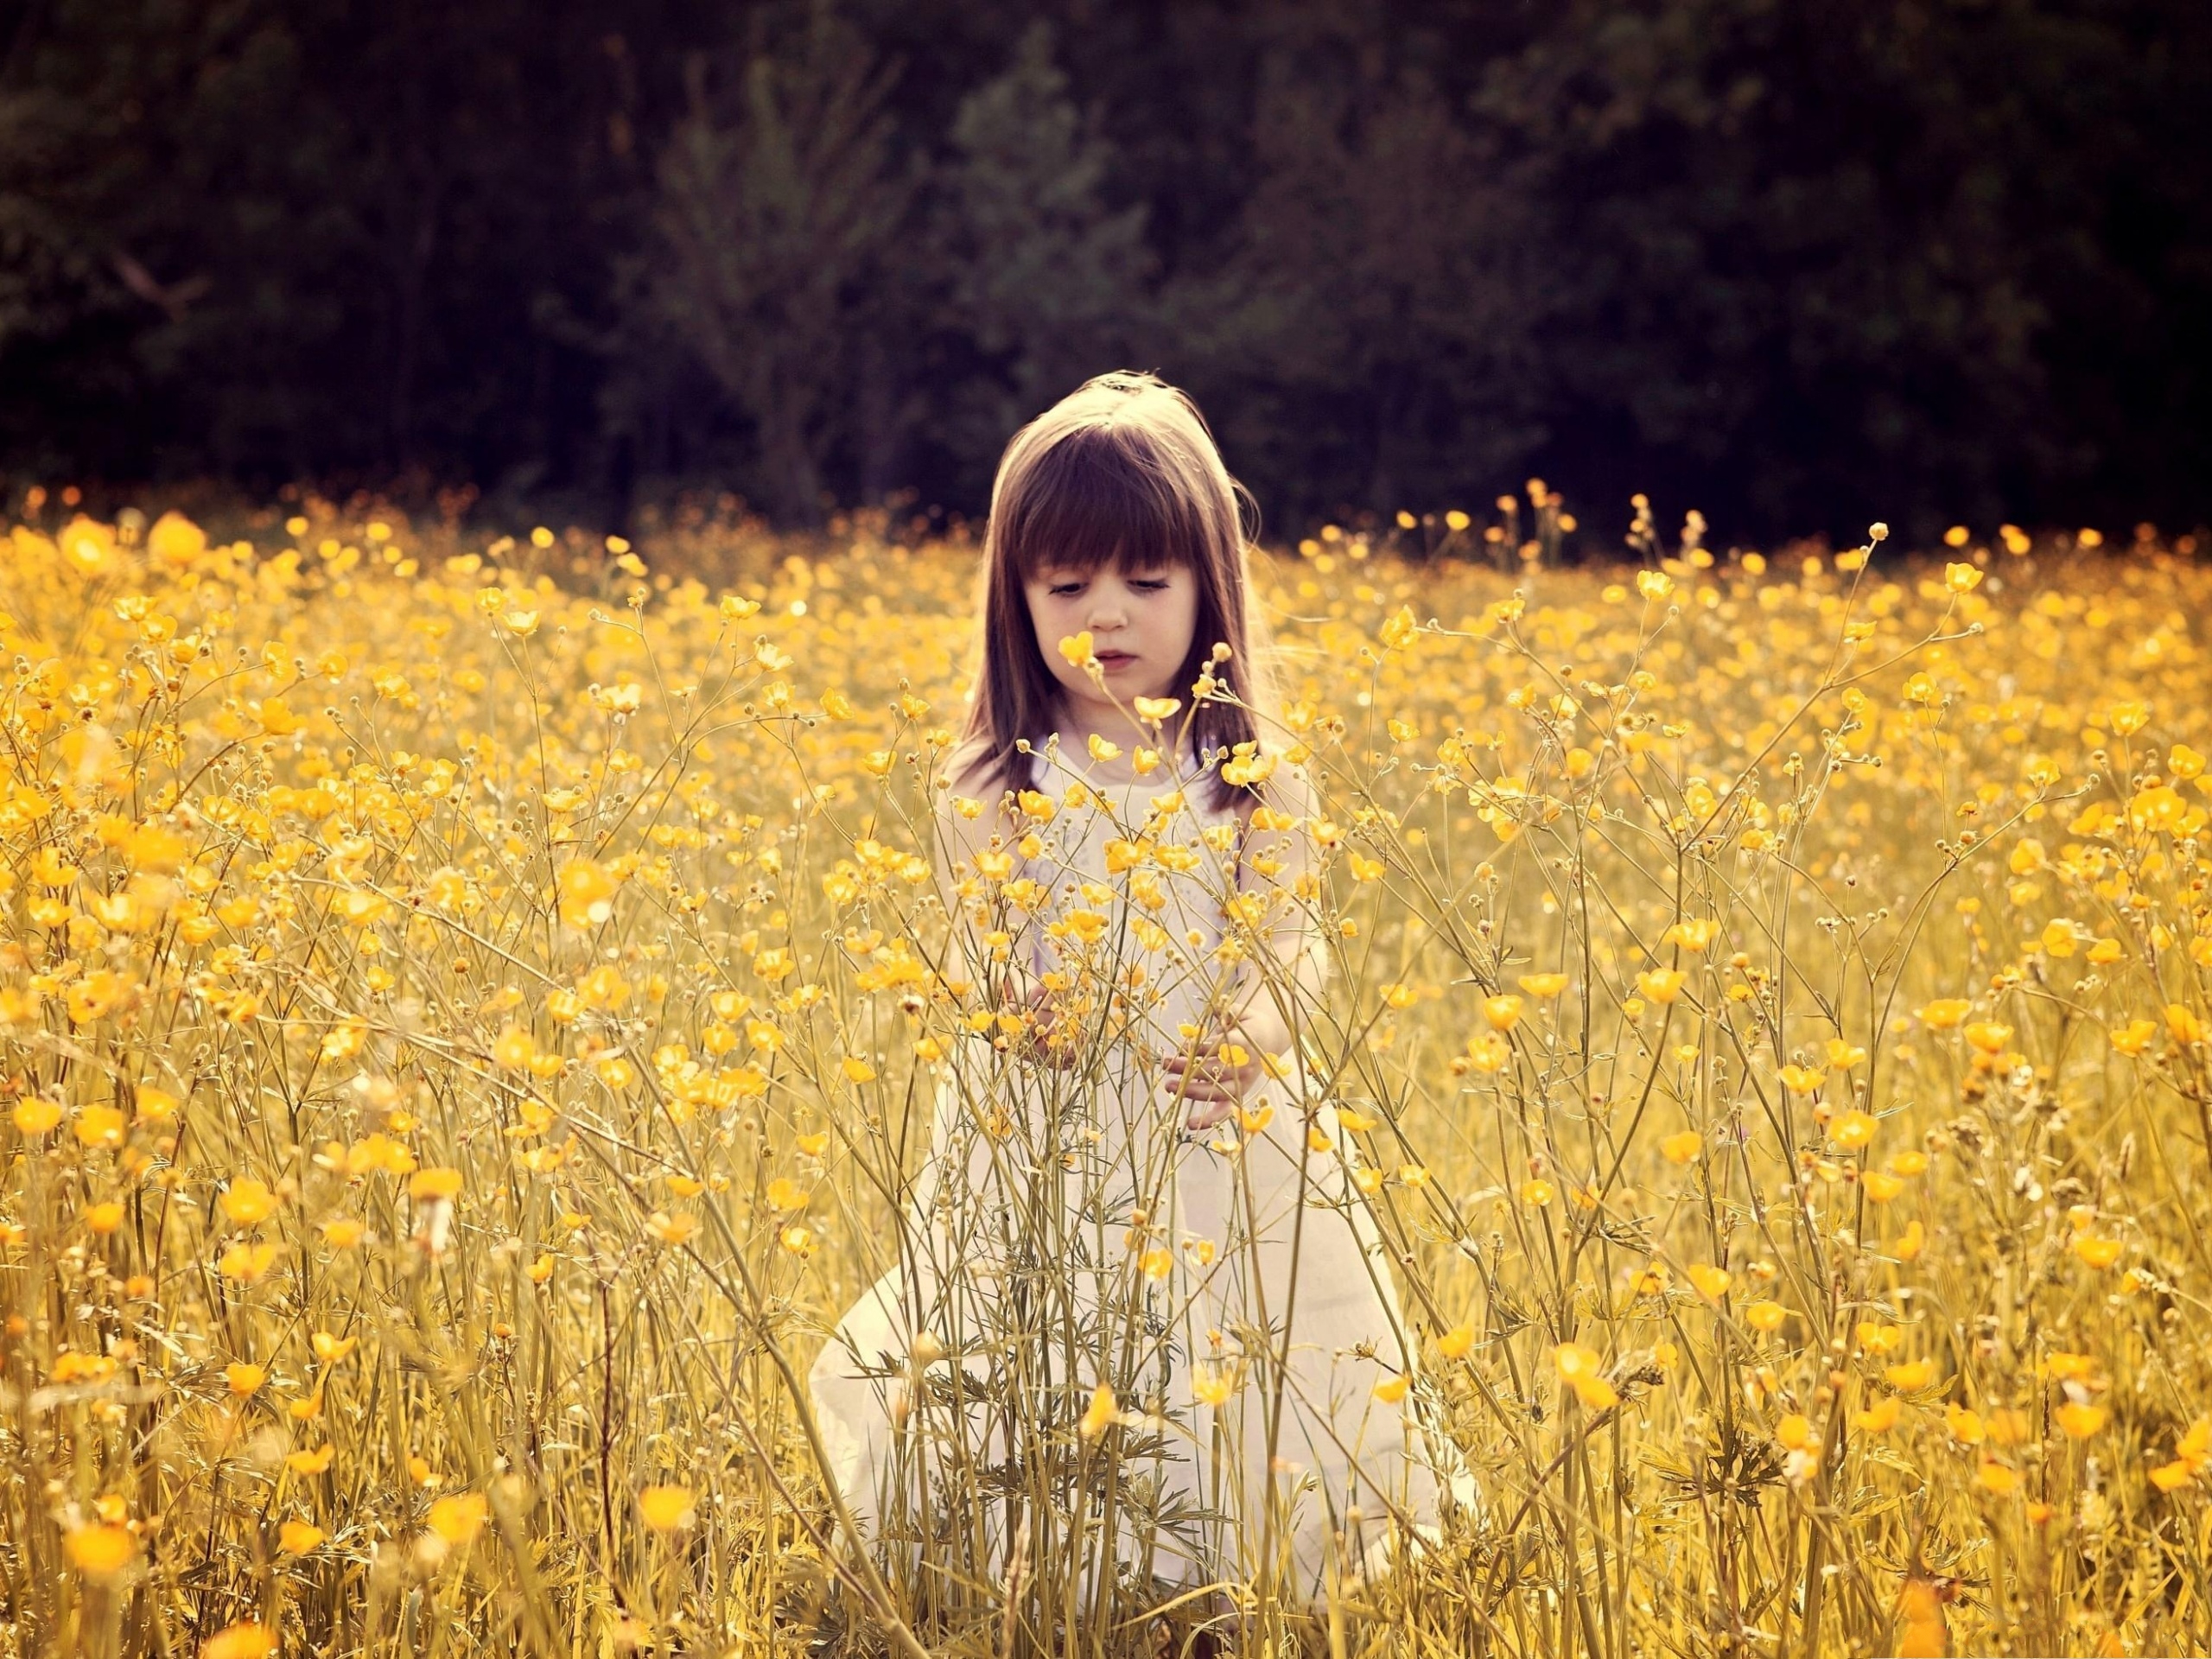 Flower Field Photography, Cute Baby Girl in Yellow Flower Sea, Having Great Fun--2560X1920 free wallpaper download